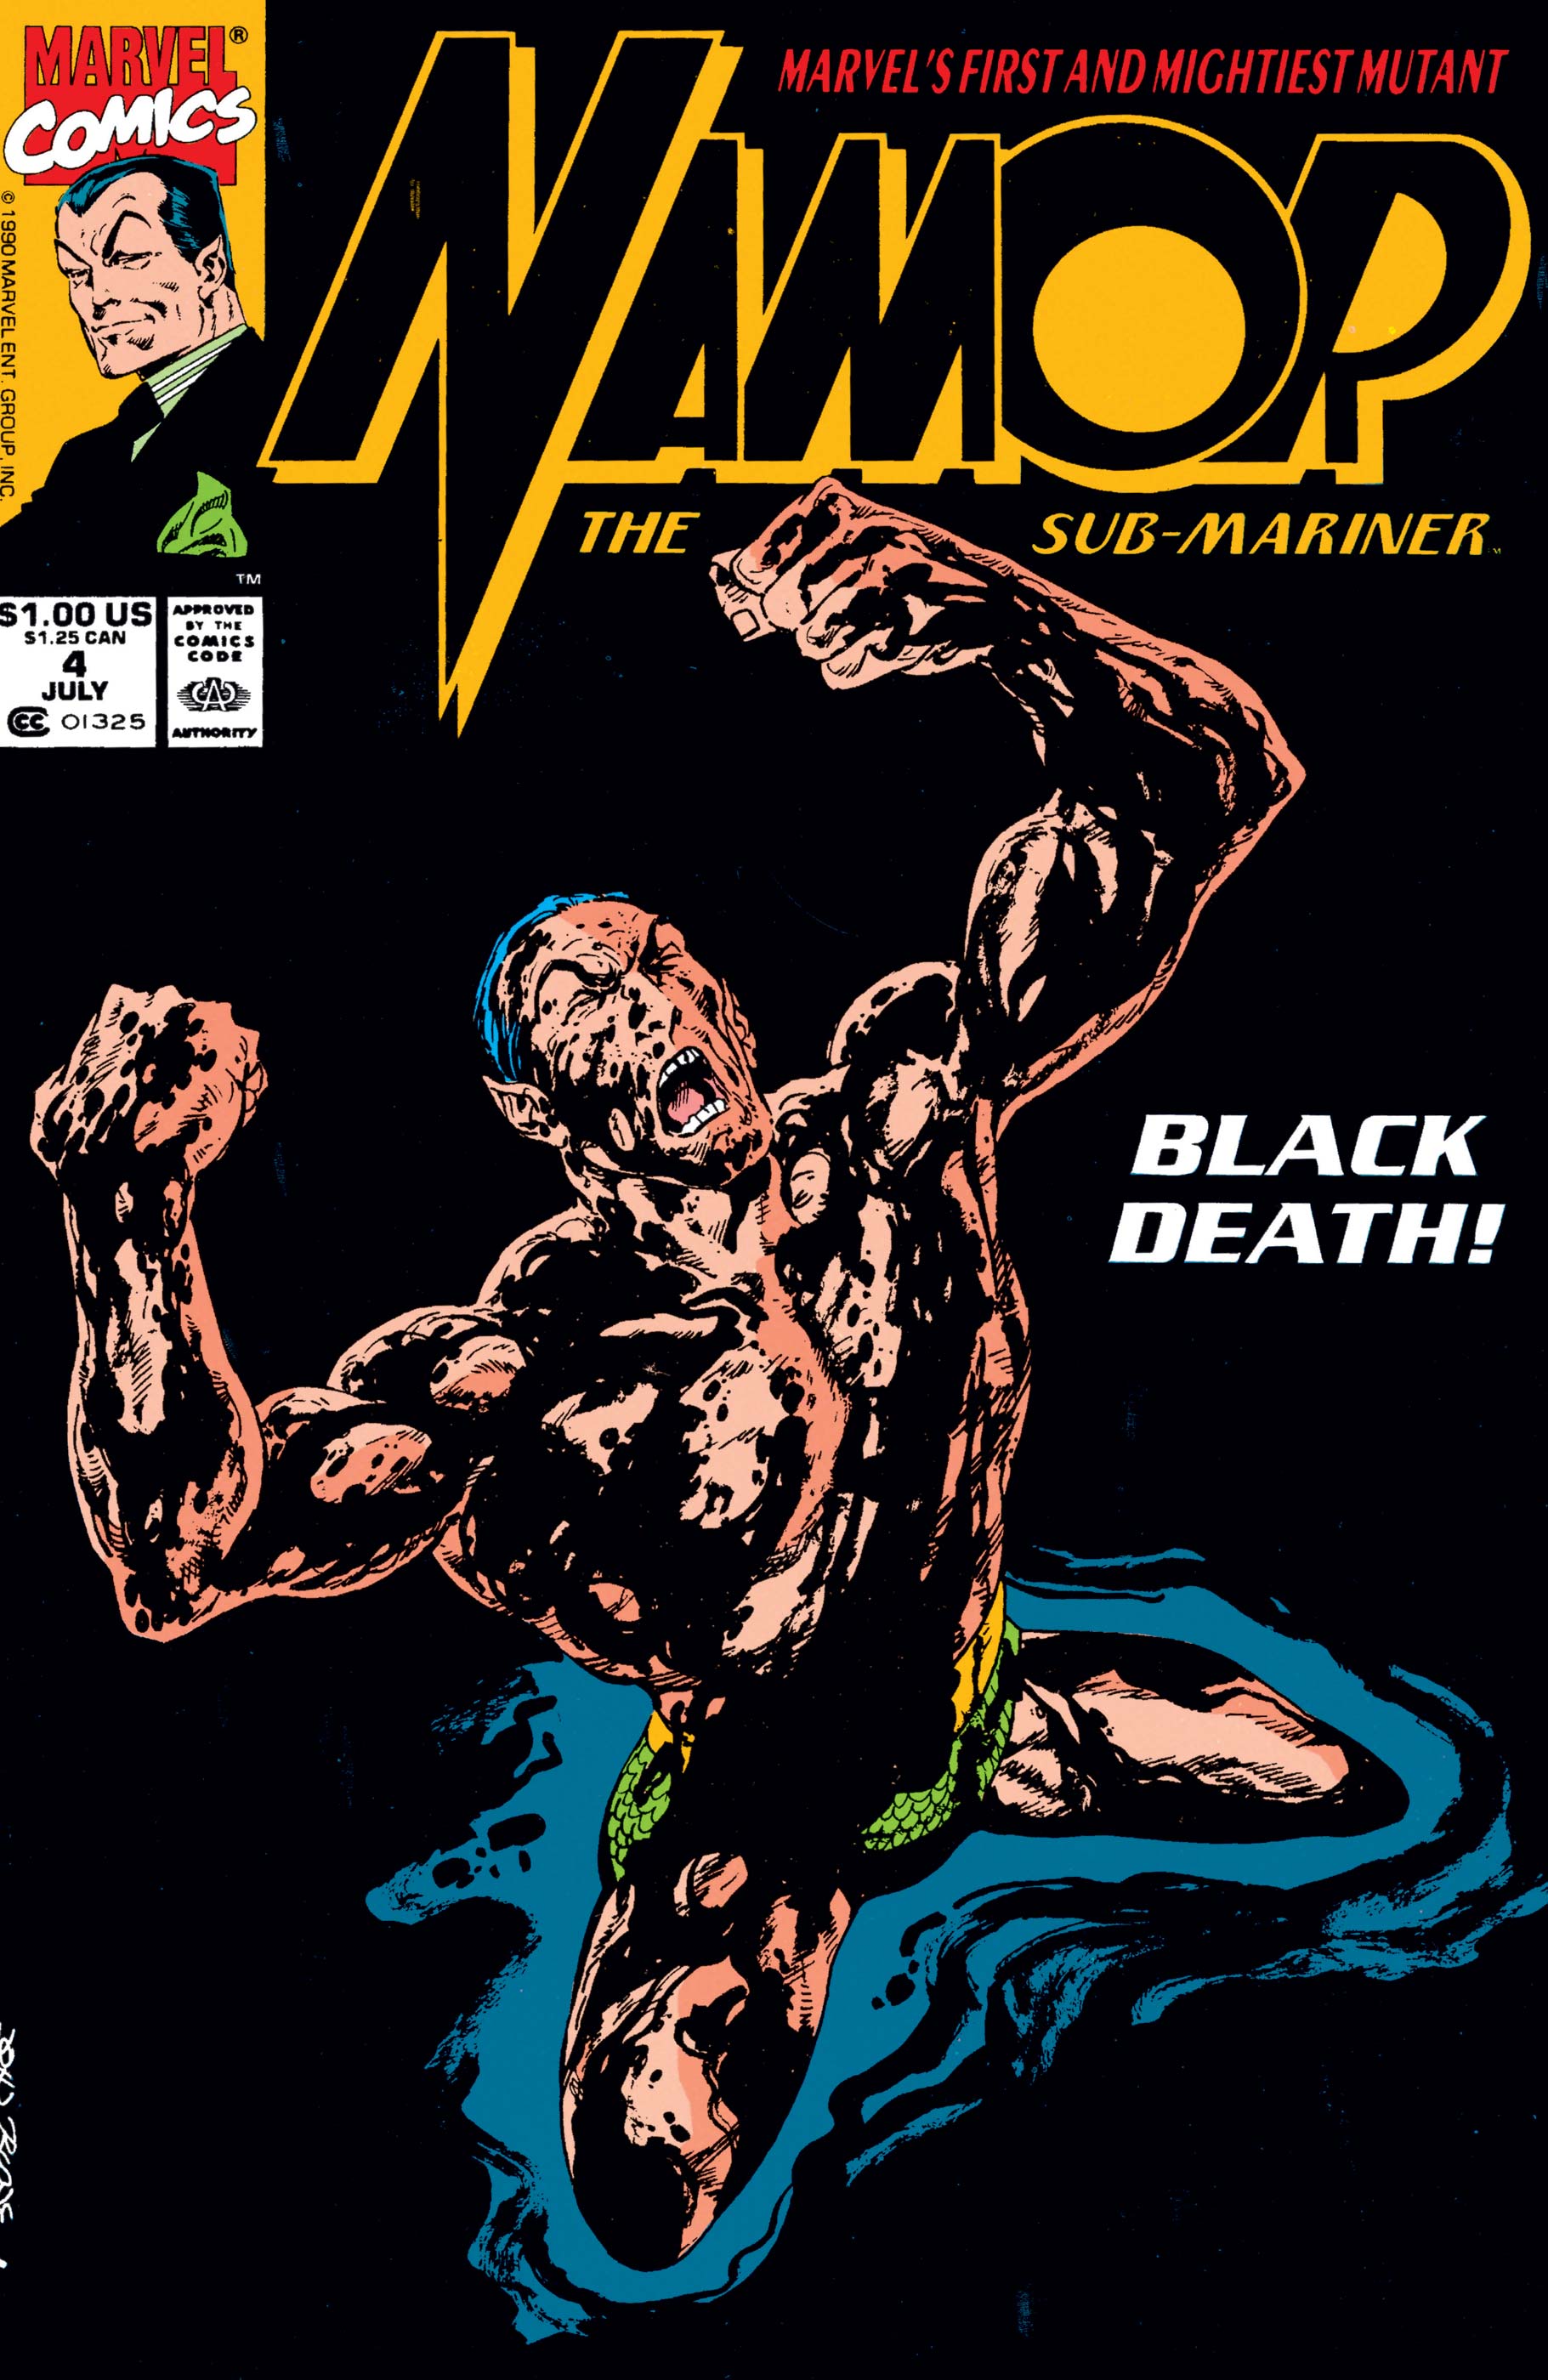 Namor: The Sub-Mariner (1990) #4